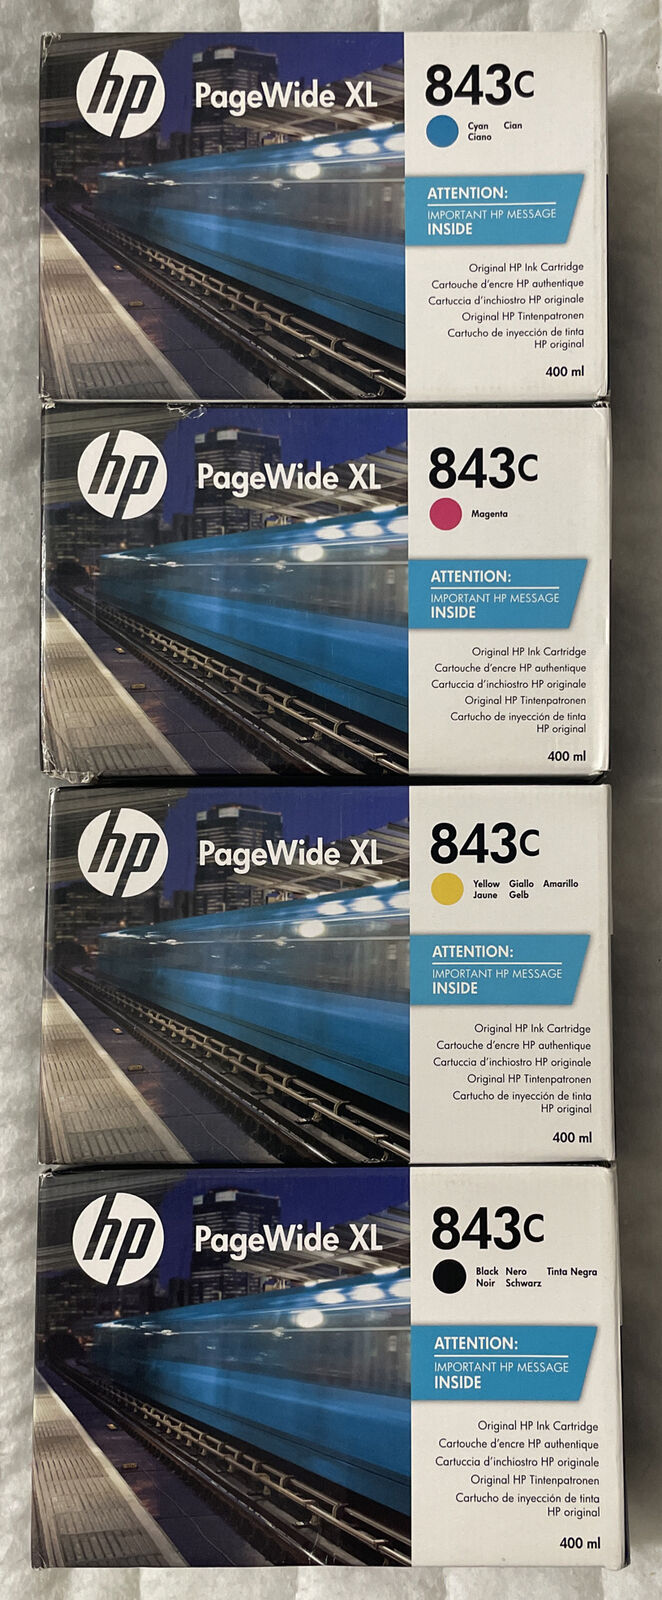 HP 843C Black Cyan Magenta Yellow PageWide XL Ink C1Q65A C1Q66A C1Q67A C1Q68A